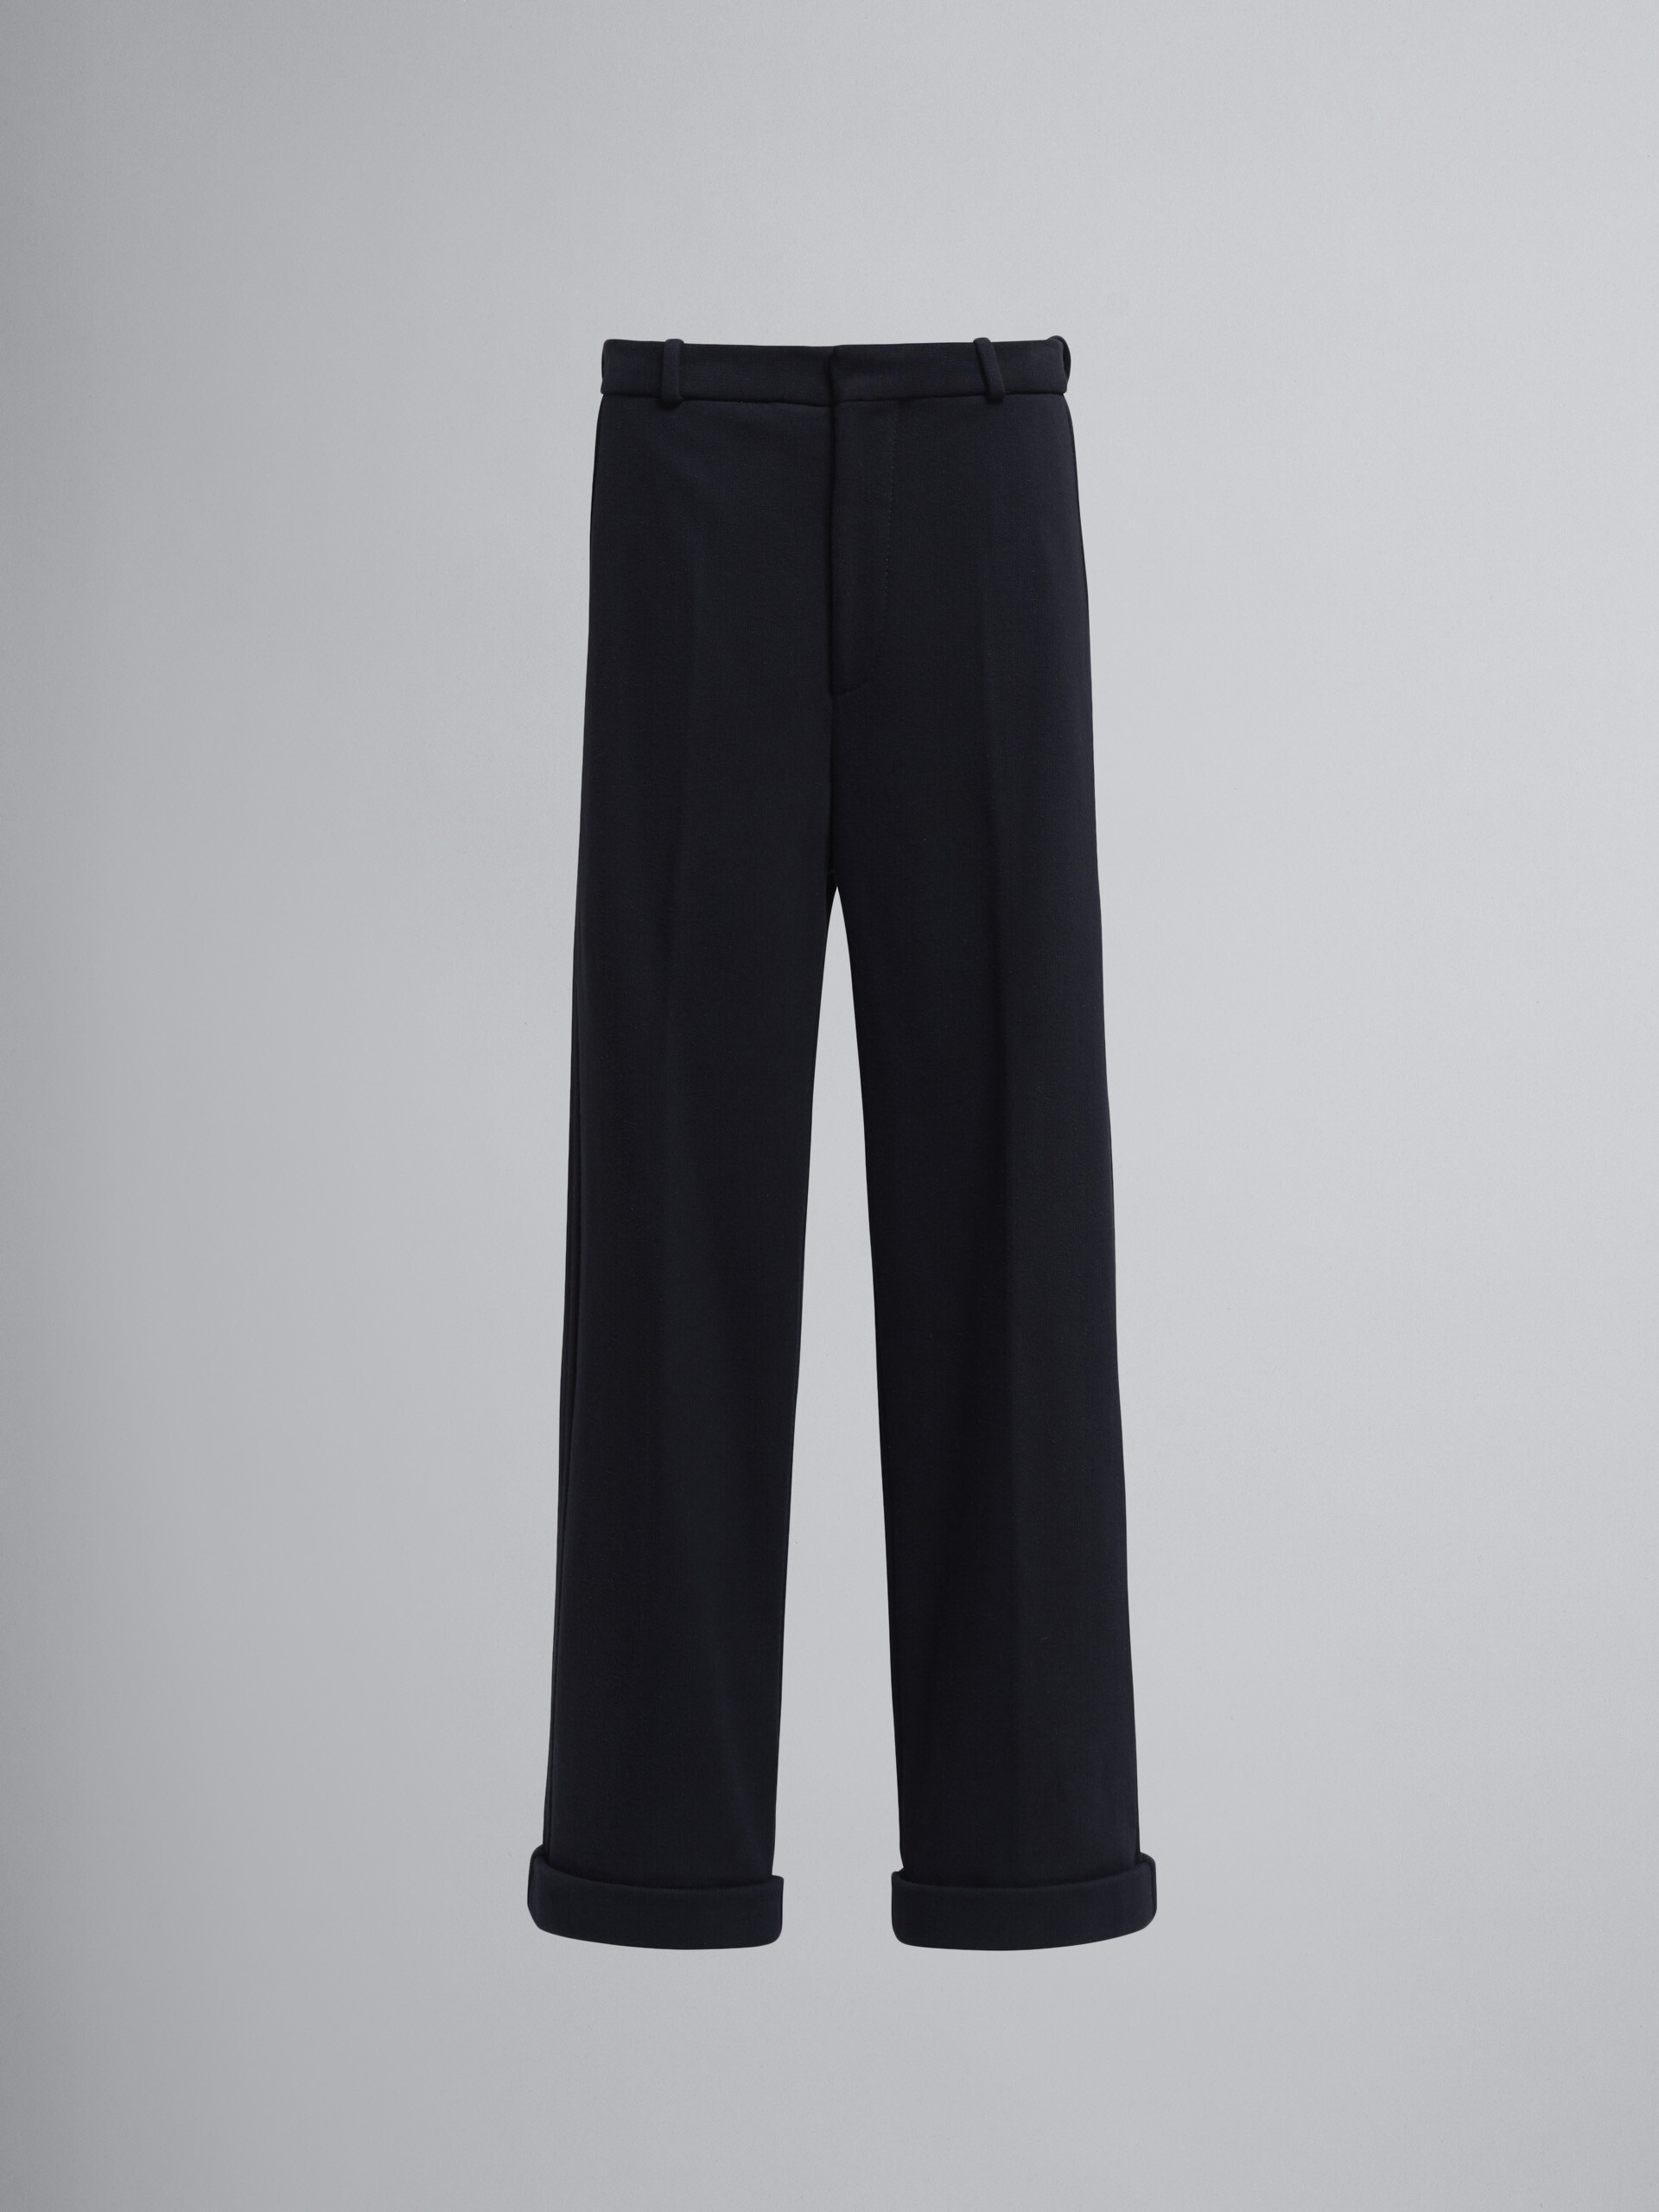 Cotton sweatshirt trousers - Pants - Image 1